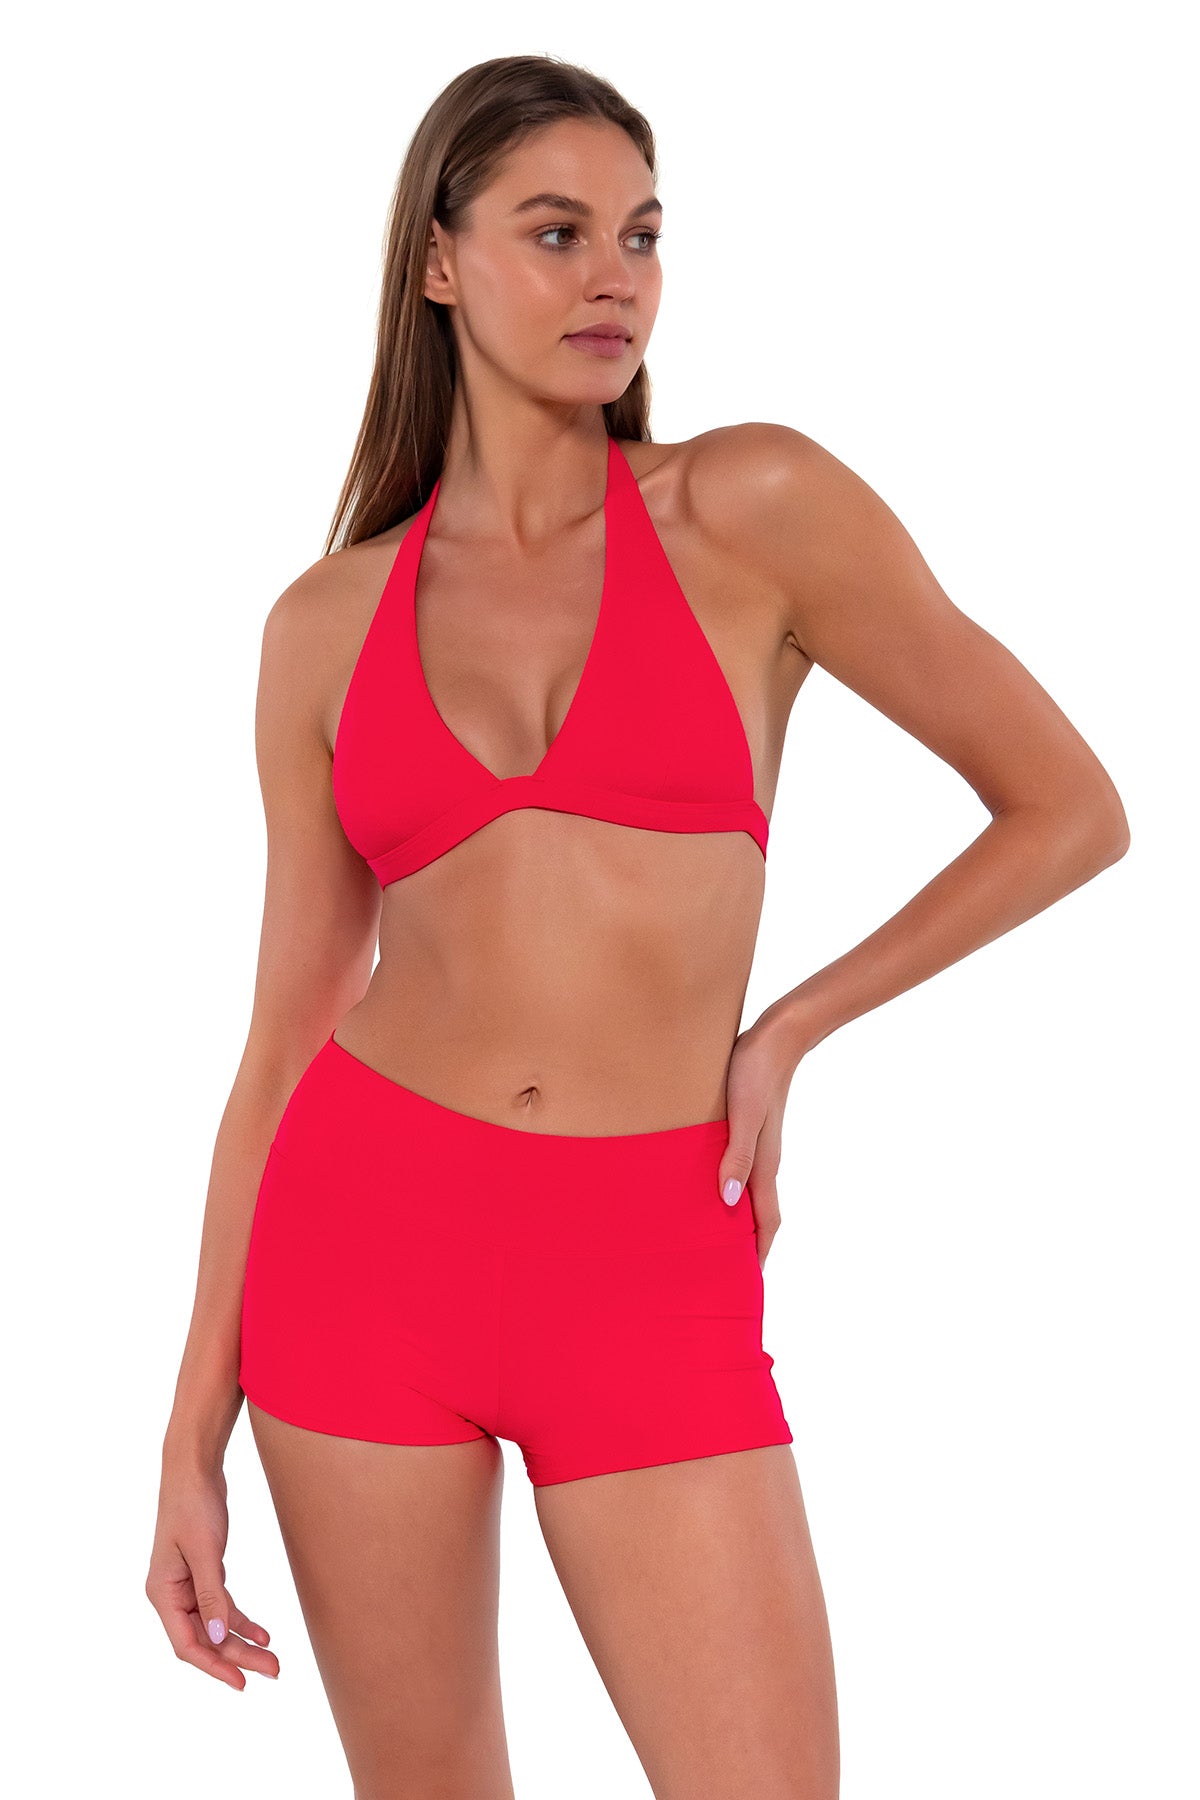 Front pose #1 of Daria wearing Sunsets Geranium Kinsley Swim Short with matching Faith Halter bikini top